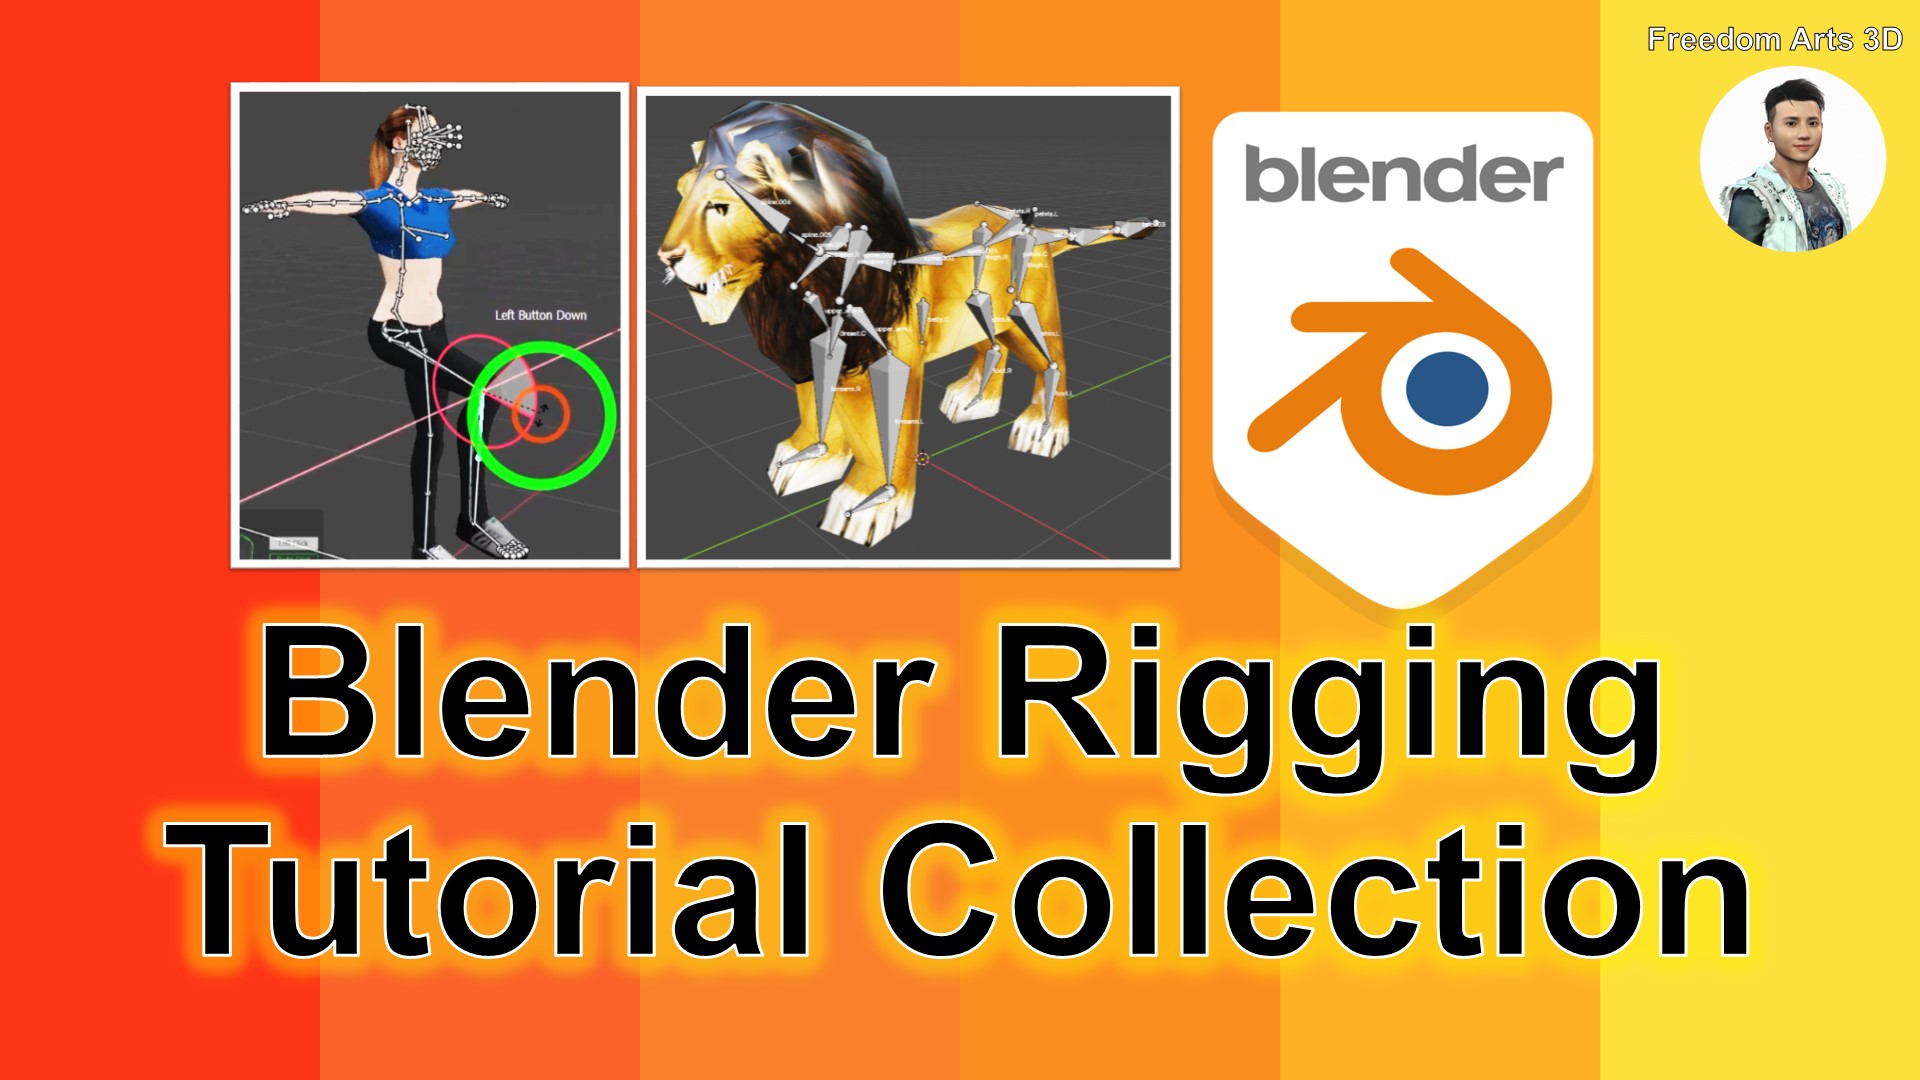 Blender Rigging Tutorial Collection